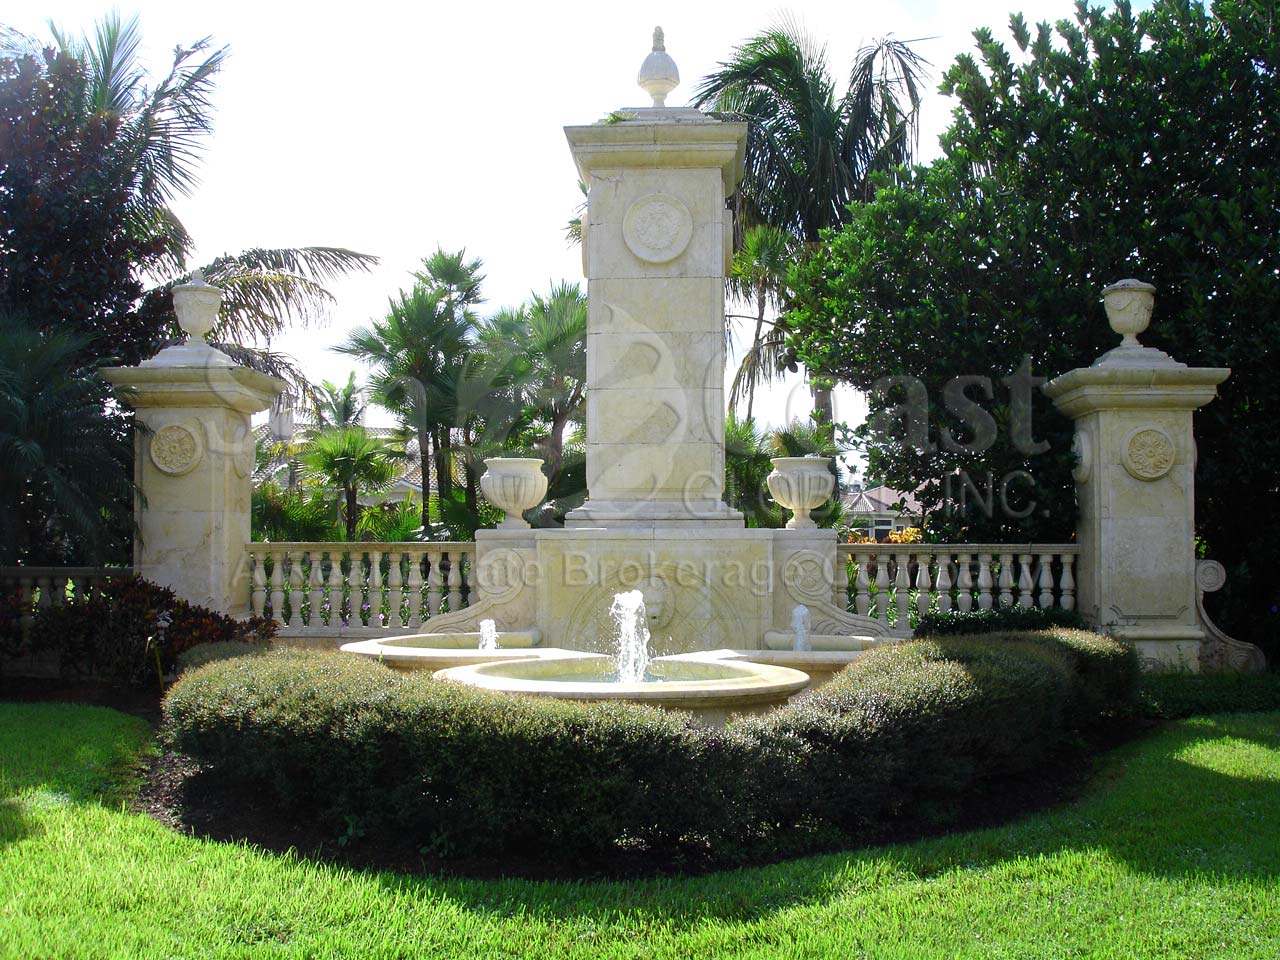 Venezia Grande Estates fountain